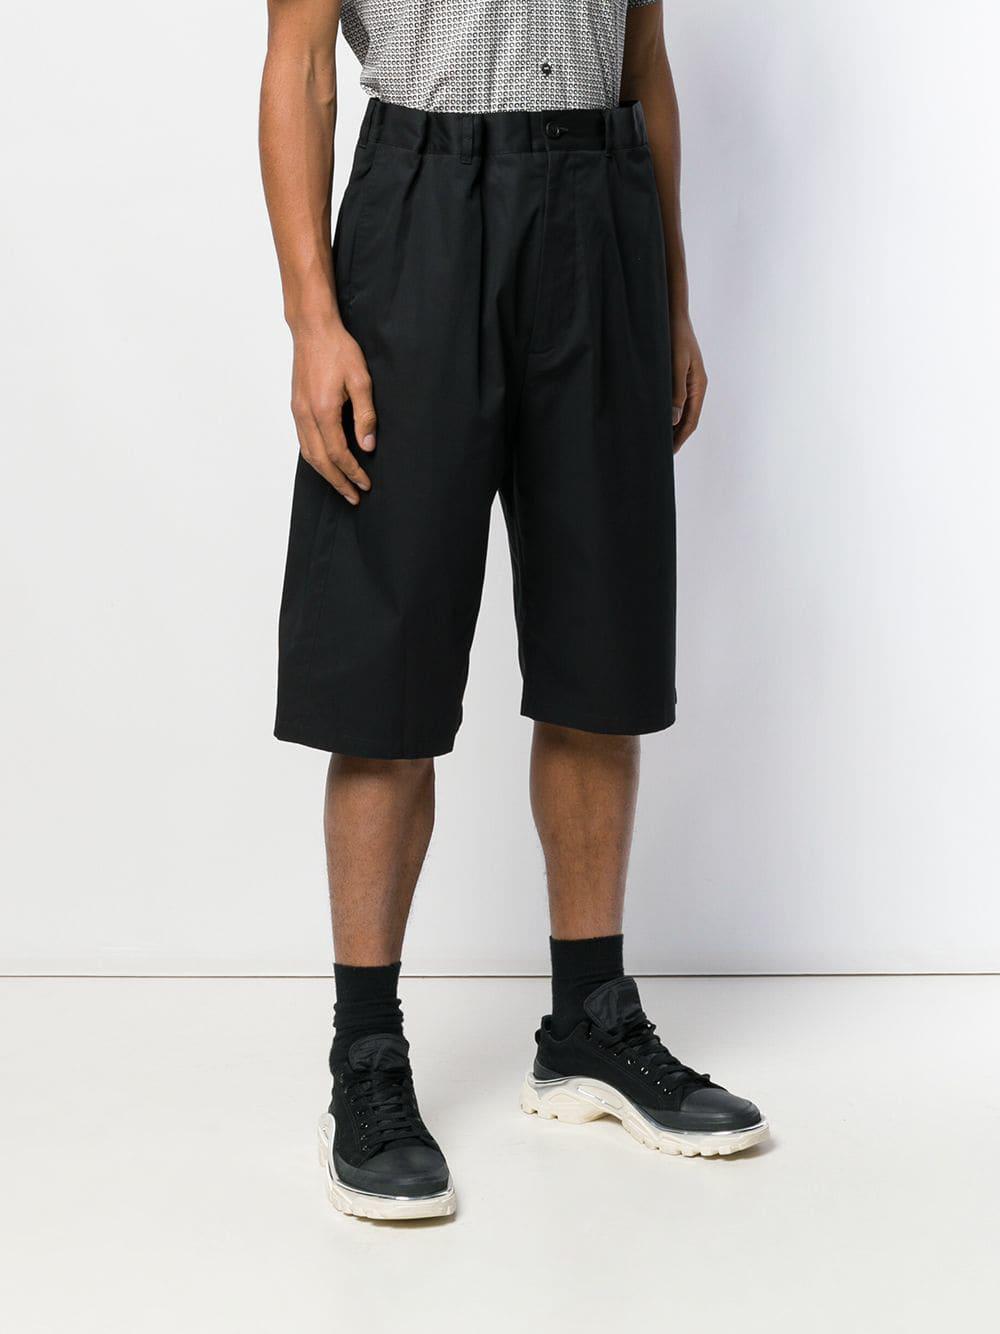 Maison Margiela Cotton Long Bermuda Shorts in Black for Men - Lyst